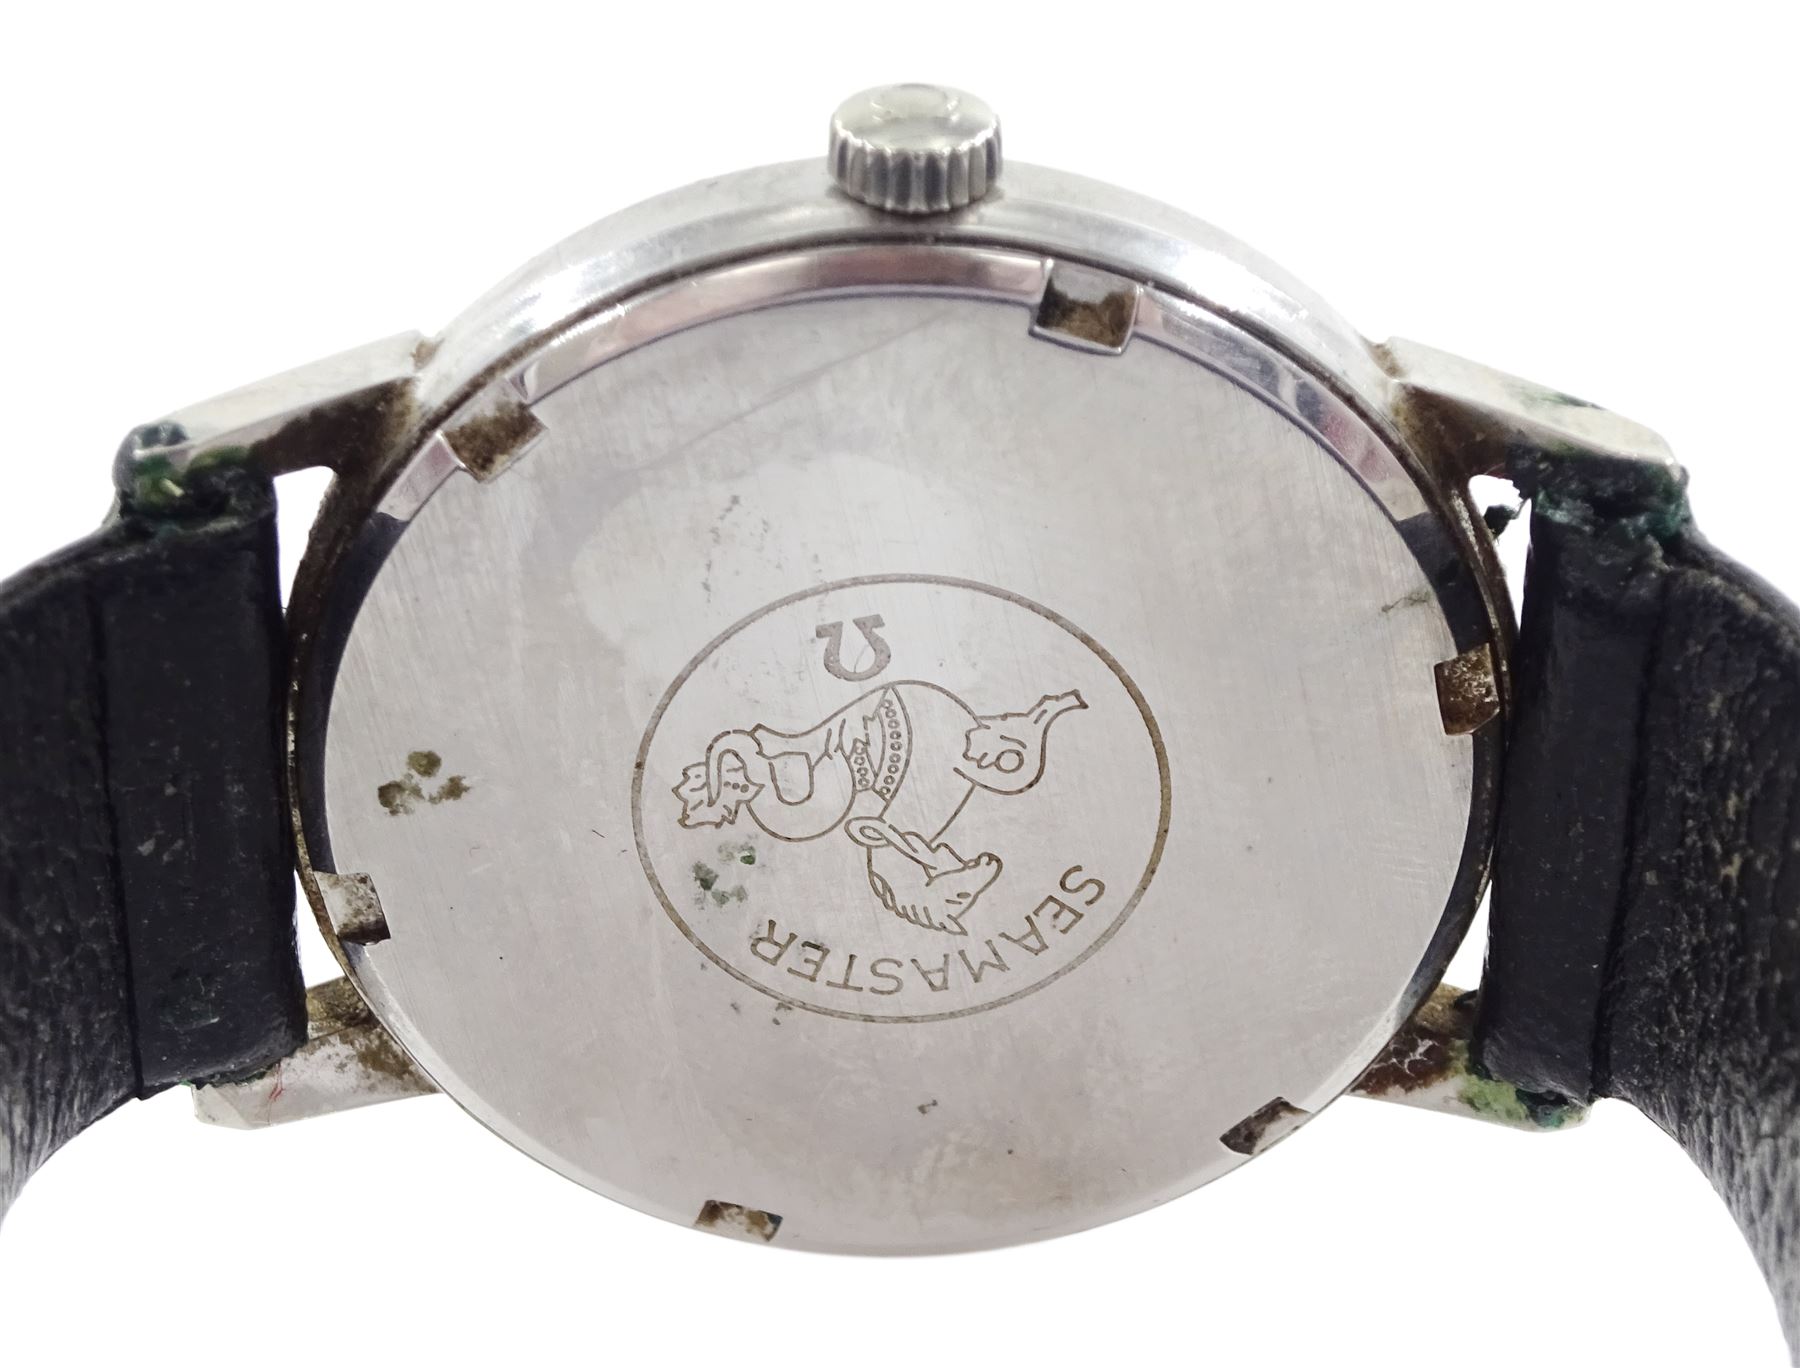 Omega Seamaster 600 gentleman's stainless steel manual wind wristwatch - Image 3 of 4